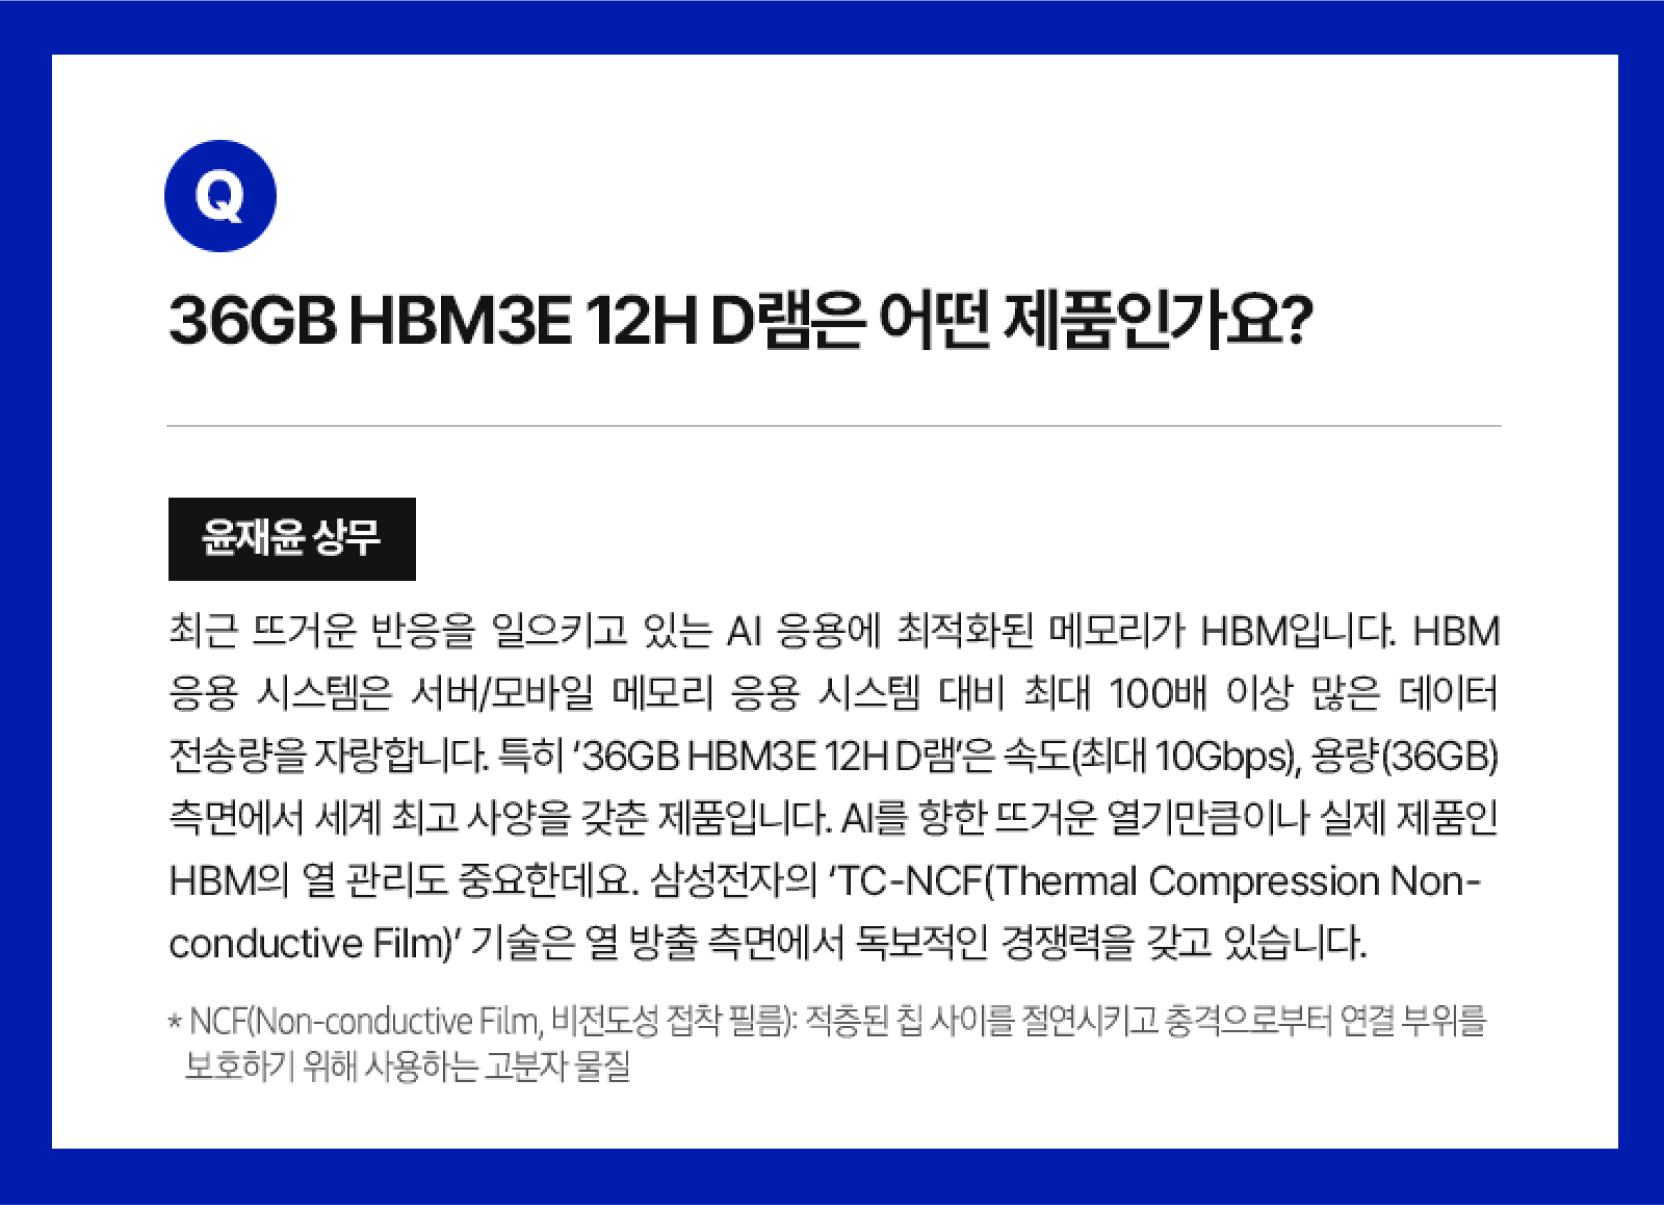 36GB HBM3E 12H D램 제품에 대한 삼성전자 윤재윤 상무 인터뷰